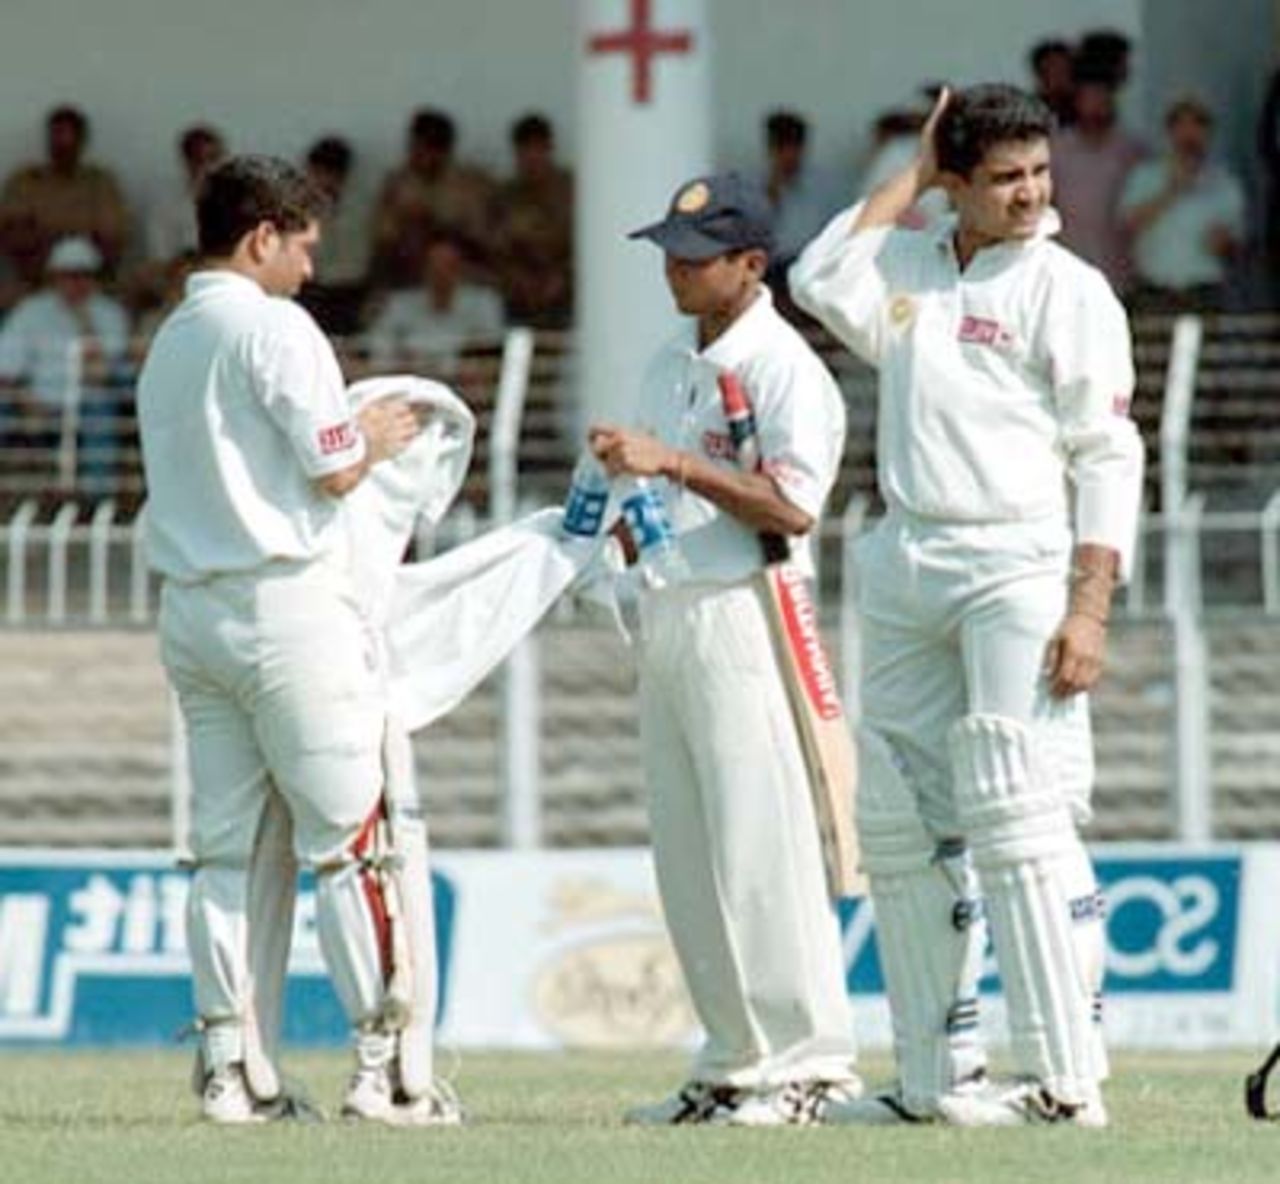 Tendulkar and Ganguly take a breather during the second day's play. Zimbabwe in India 2000/01, 2nd Test, India v Zimbabwe Vidarbha C.A. Ground, Nagpur, 25-29 November 2000 (Day 2)